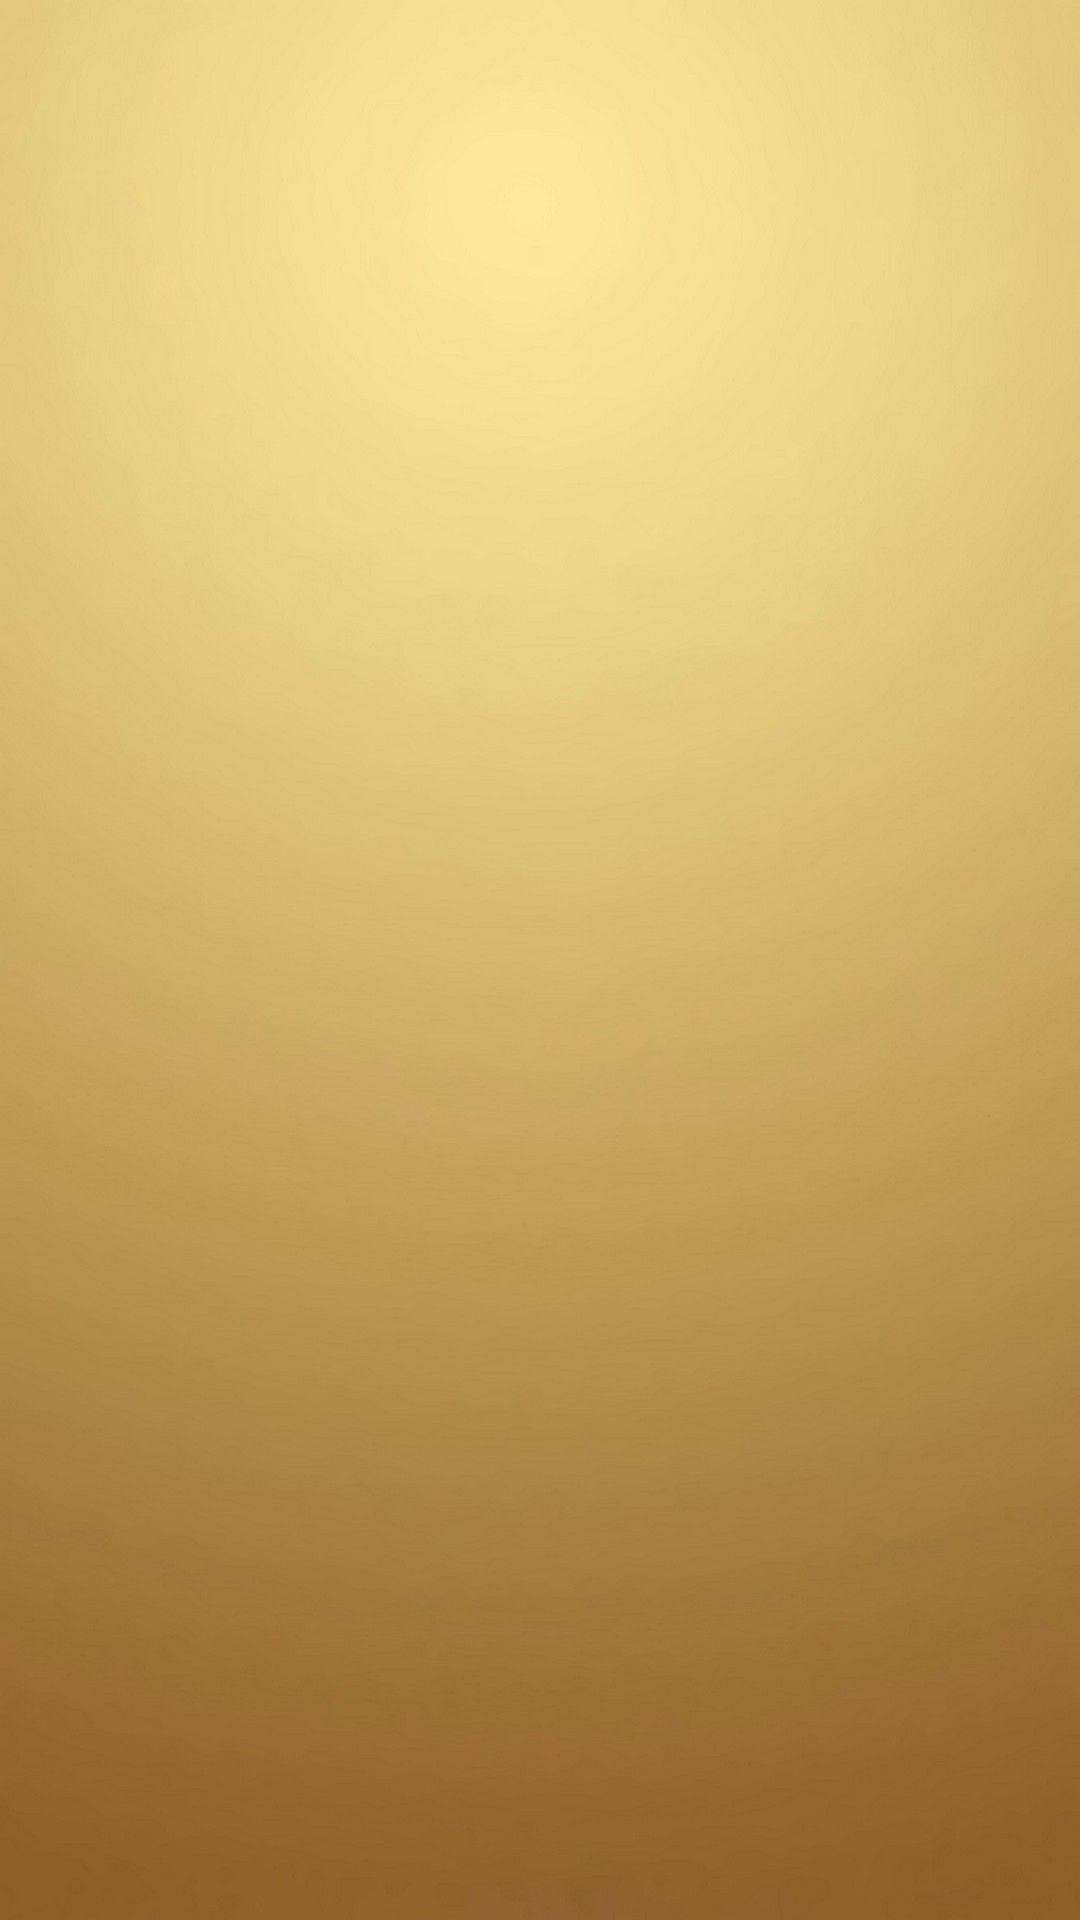 Plain Gold Gradient Background Wallpaper